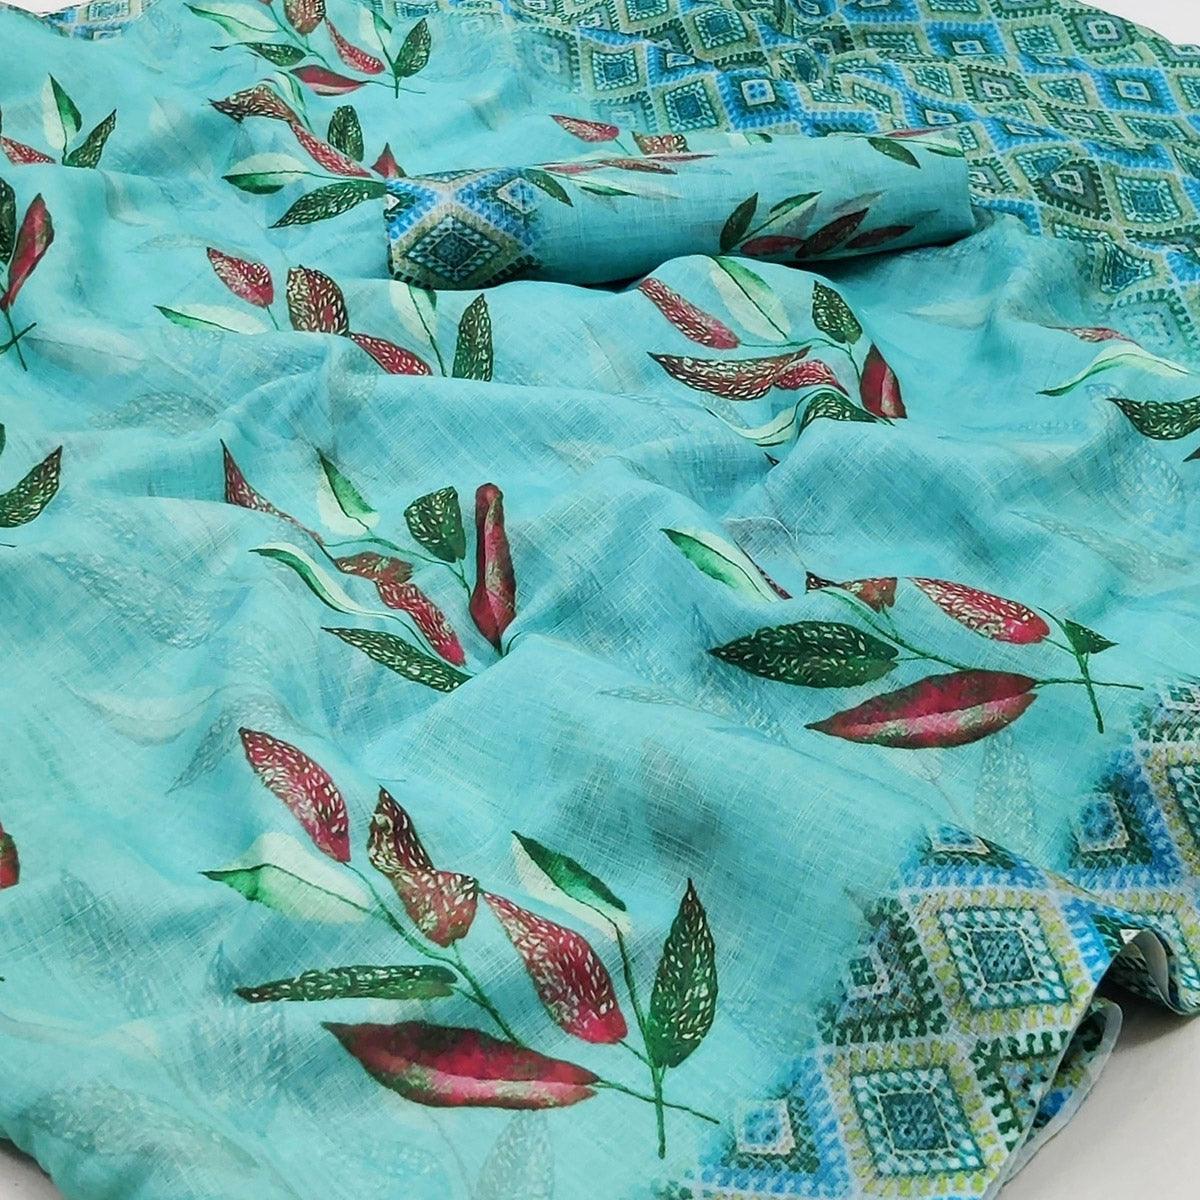 Blue Printed Linen Saree - Peachmode